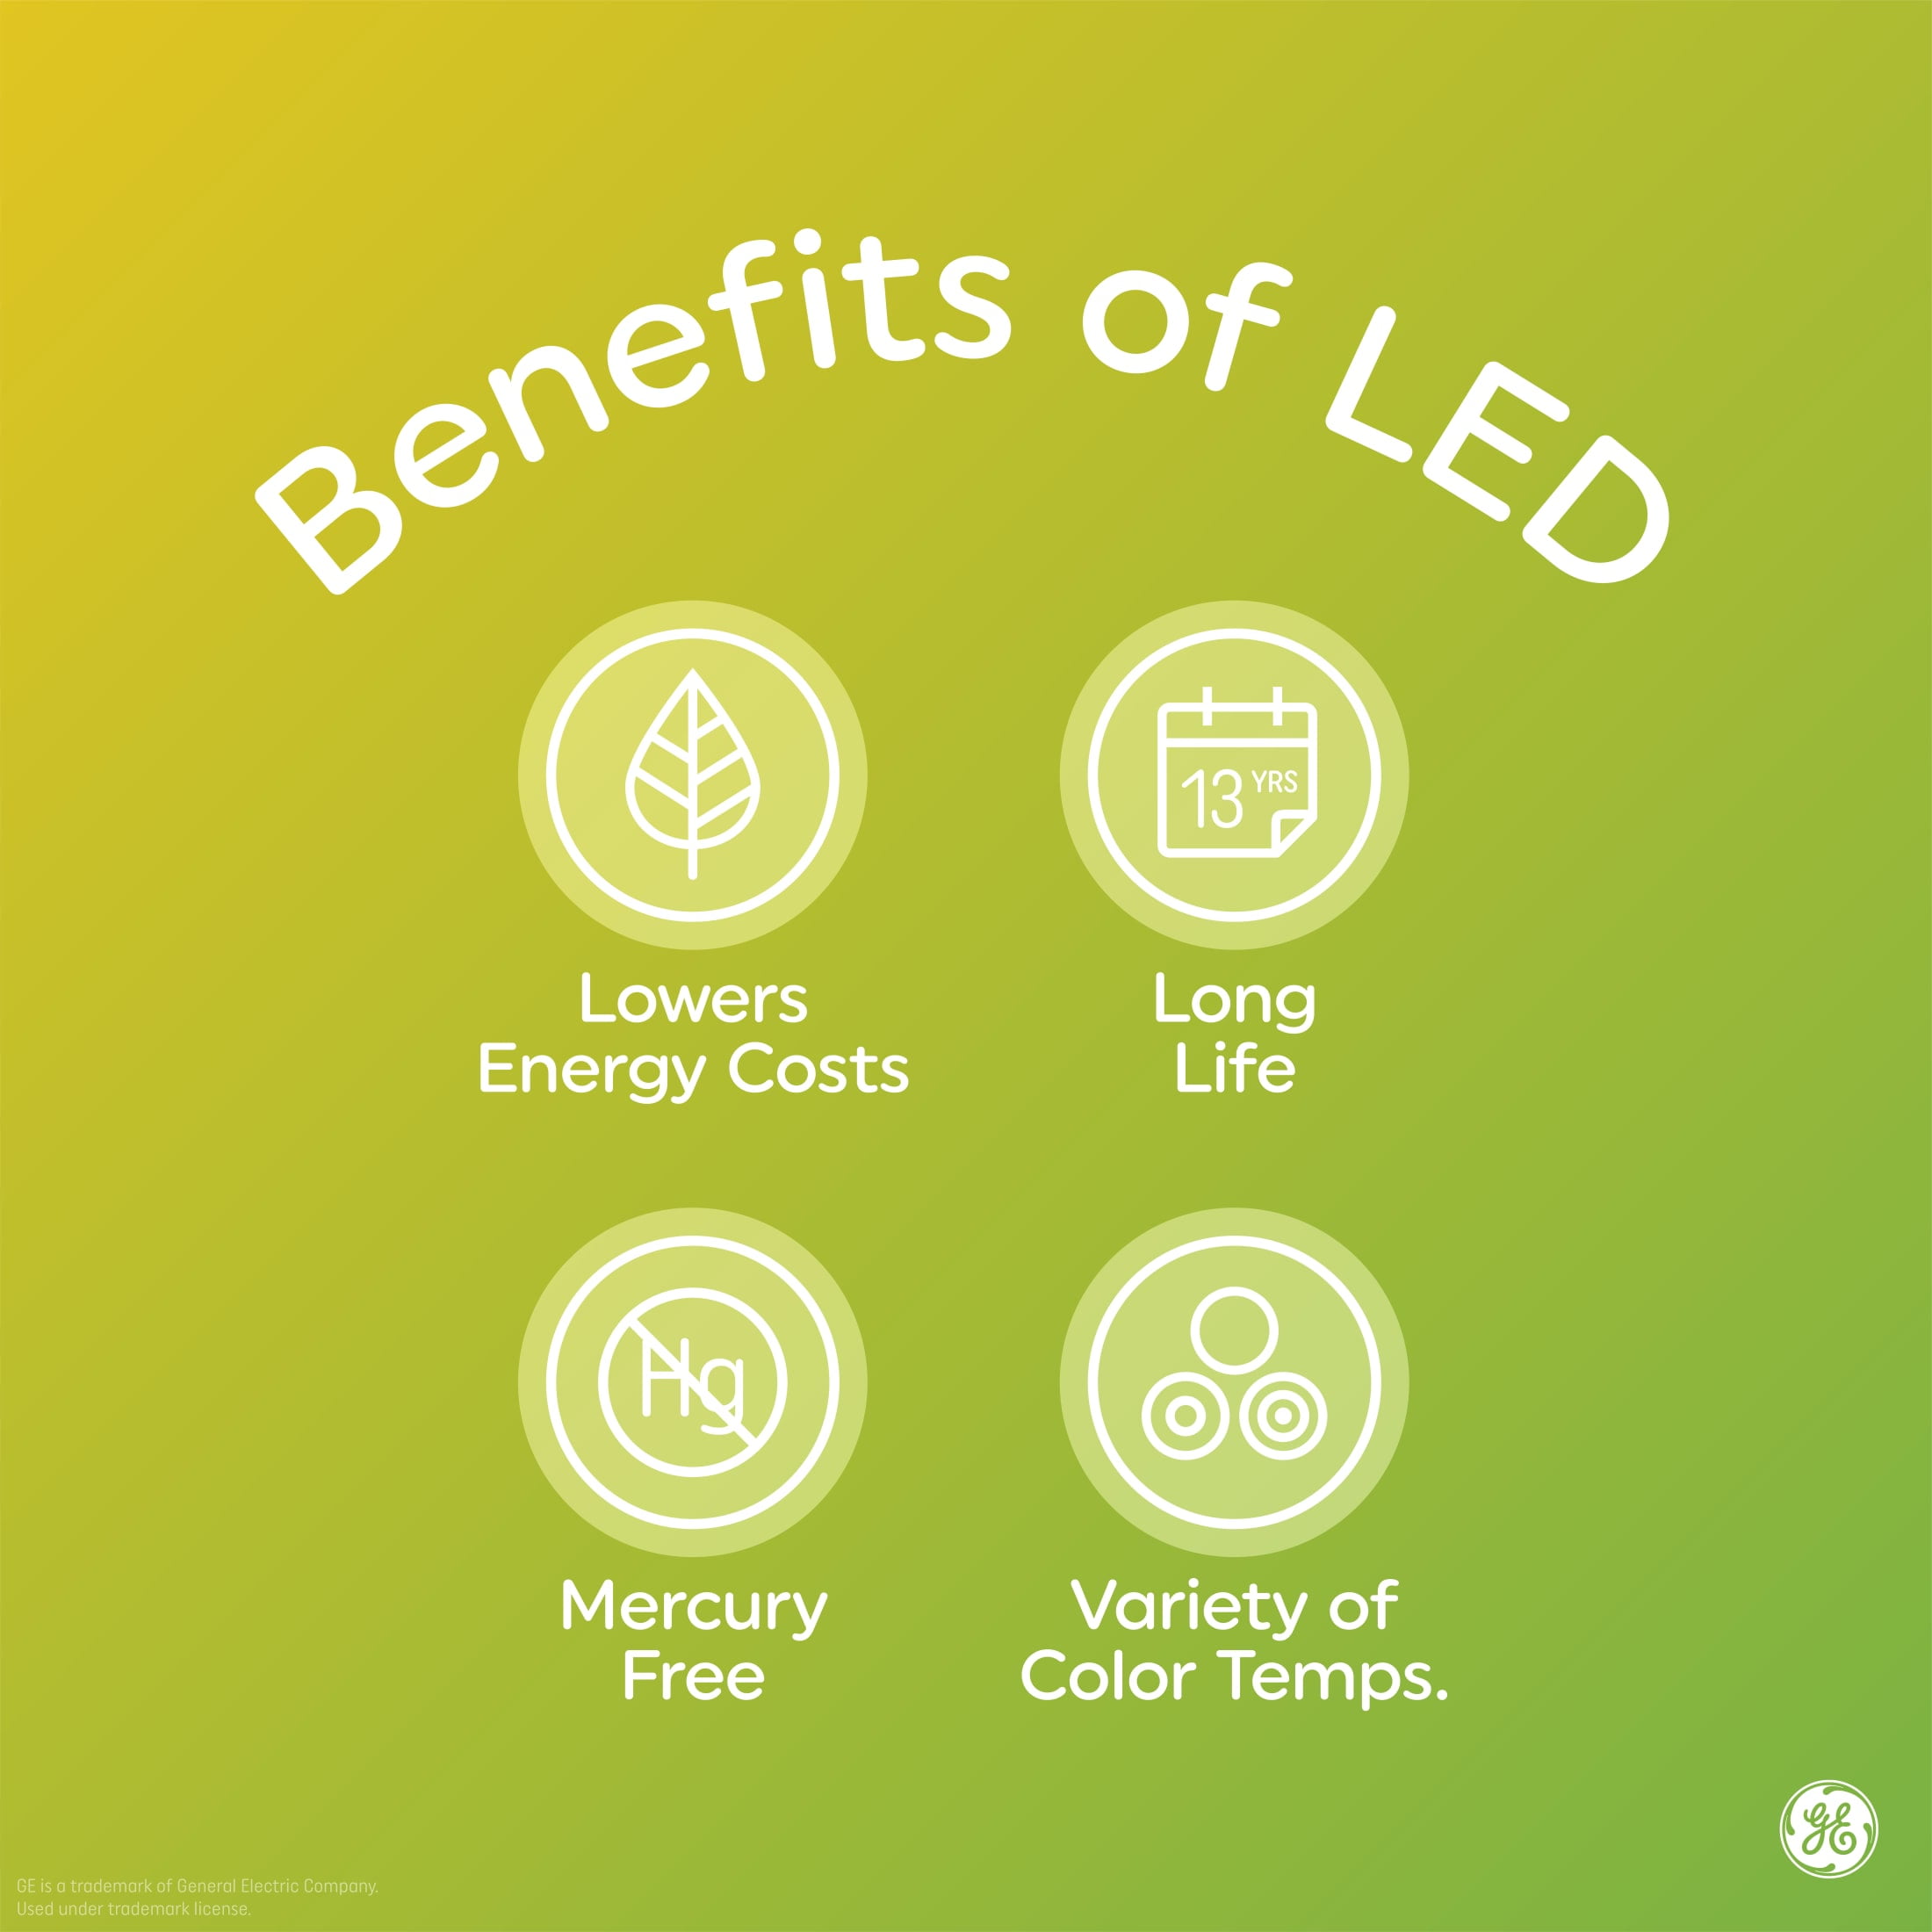 GE LED Light Bulbs, Refrigerator or Freezer Light Bulb, 4.5 Watt